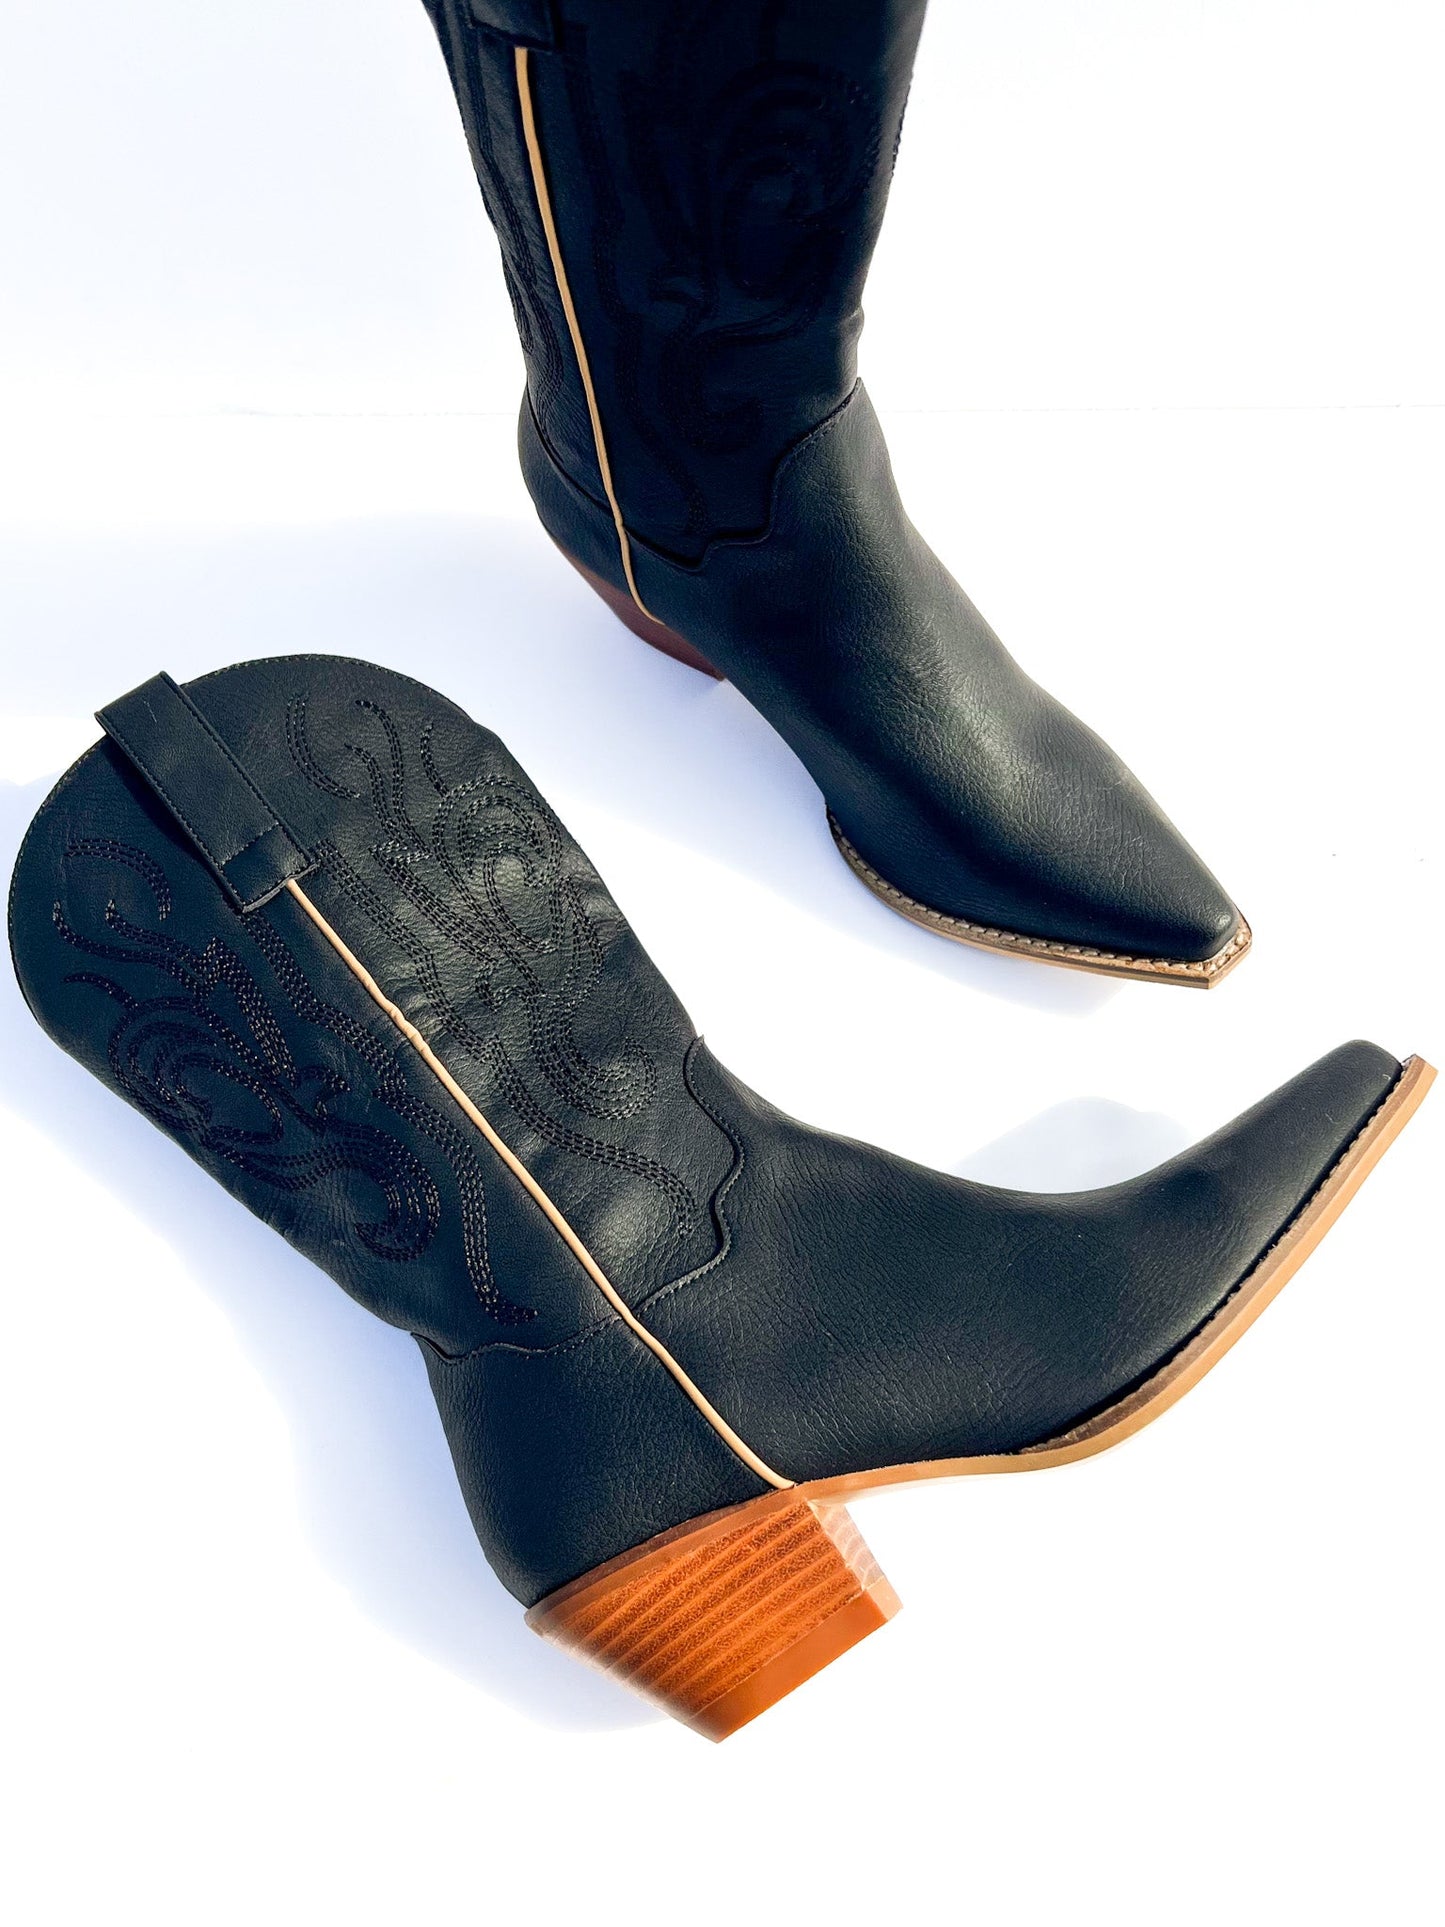 Dakota Western Boots